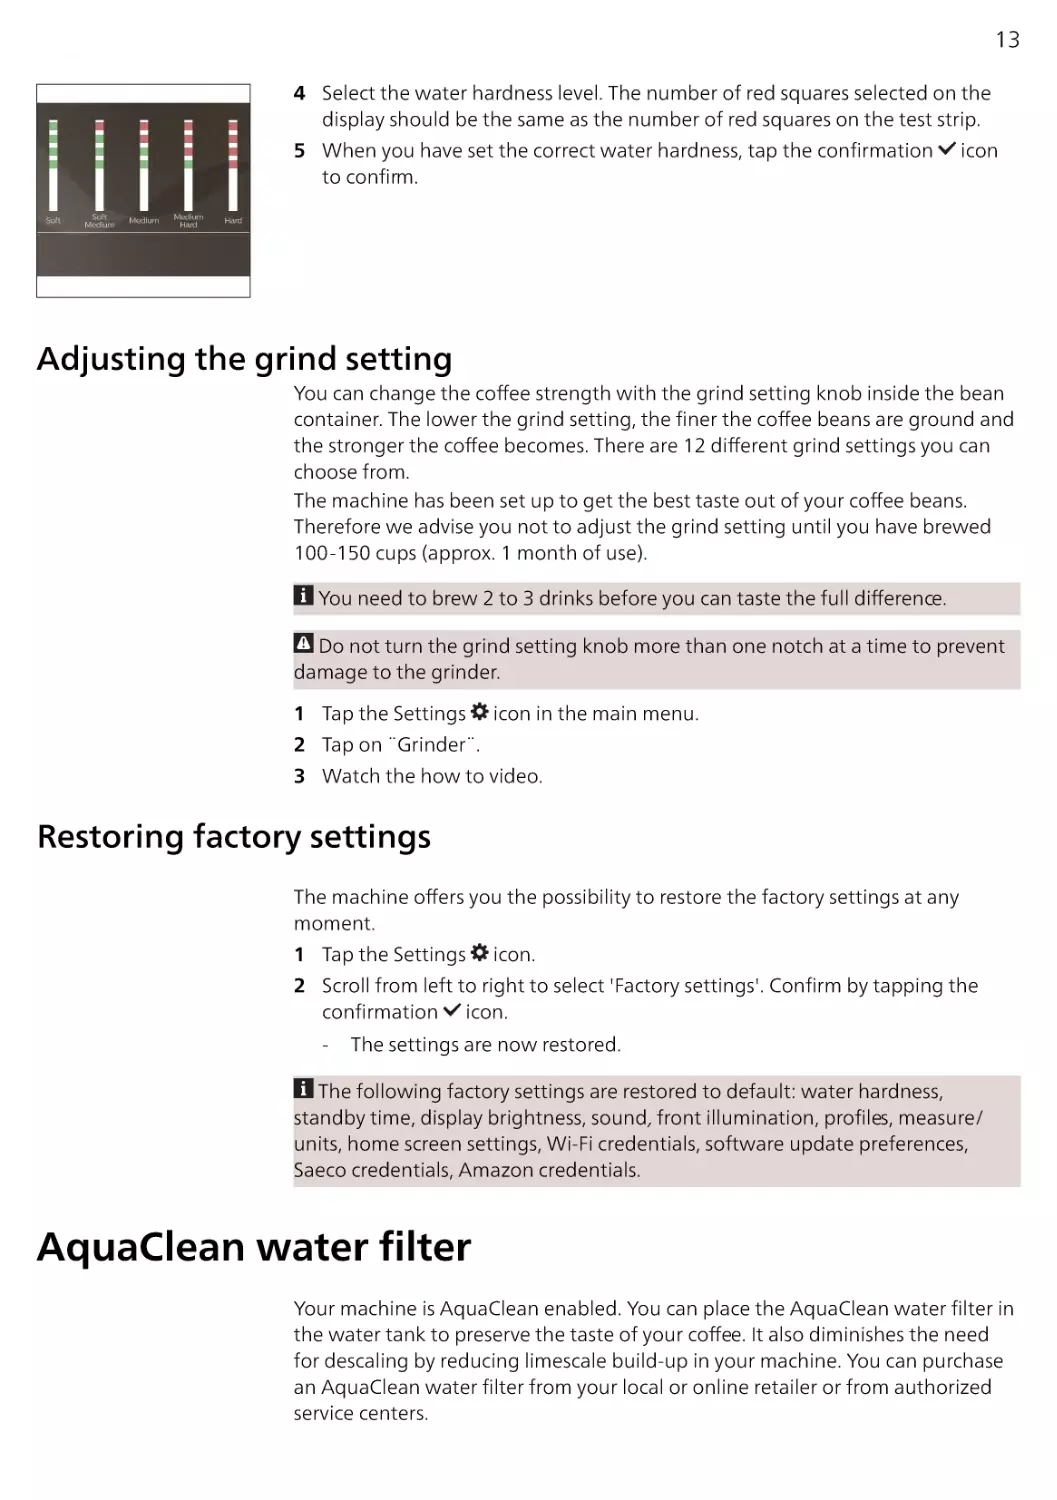 Adjusting the grind setting
Restoring factory settings
AquaClean water filter